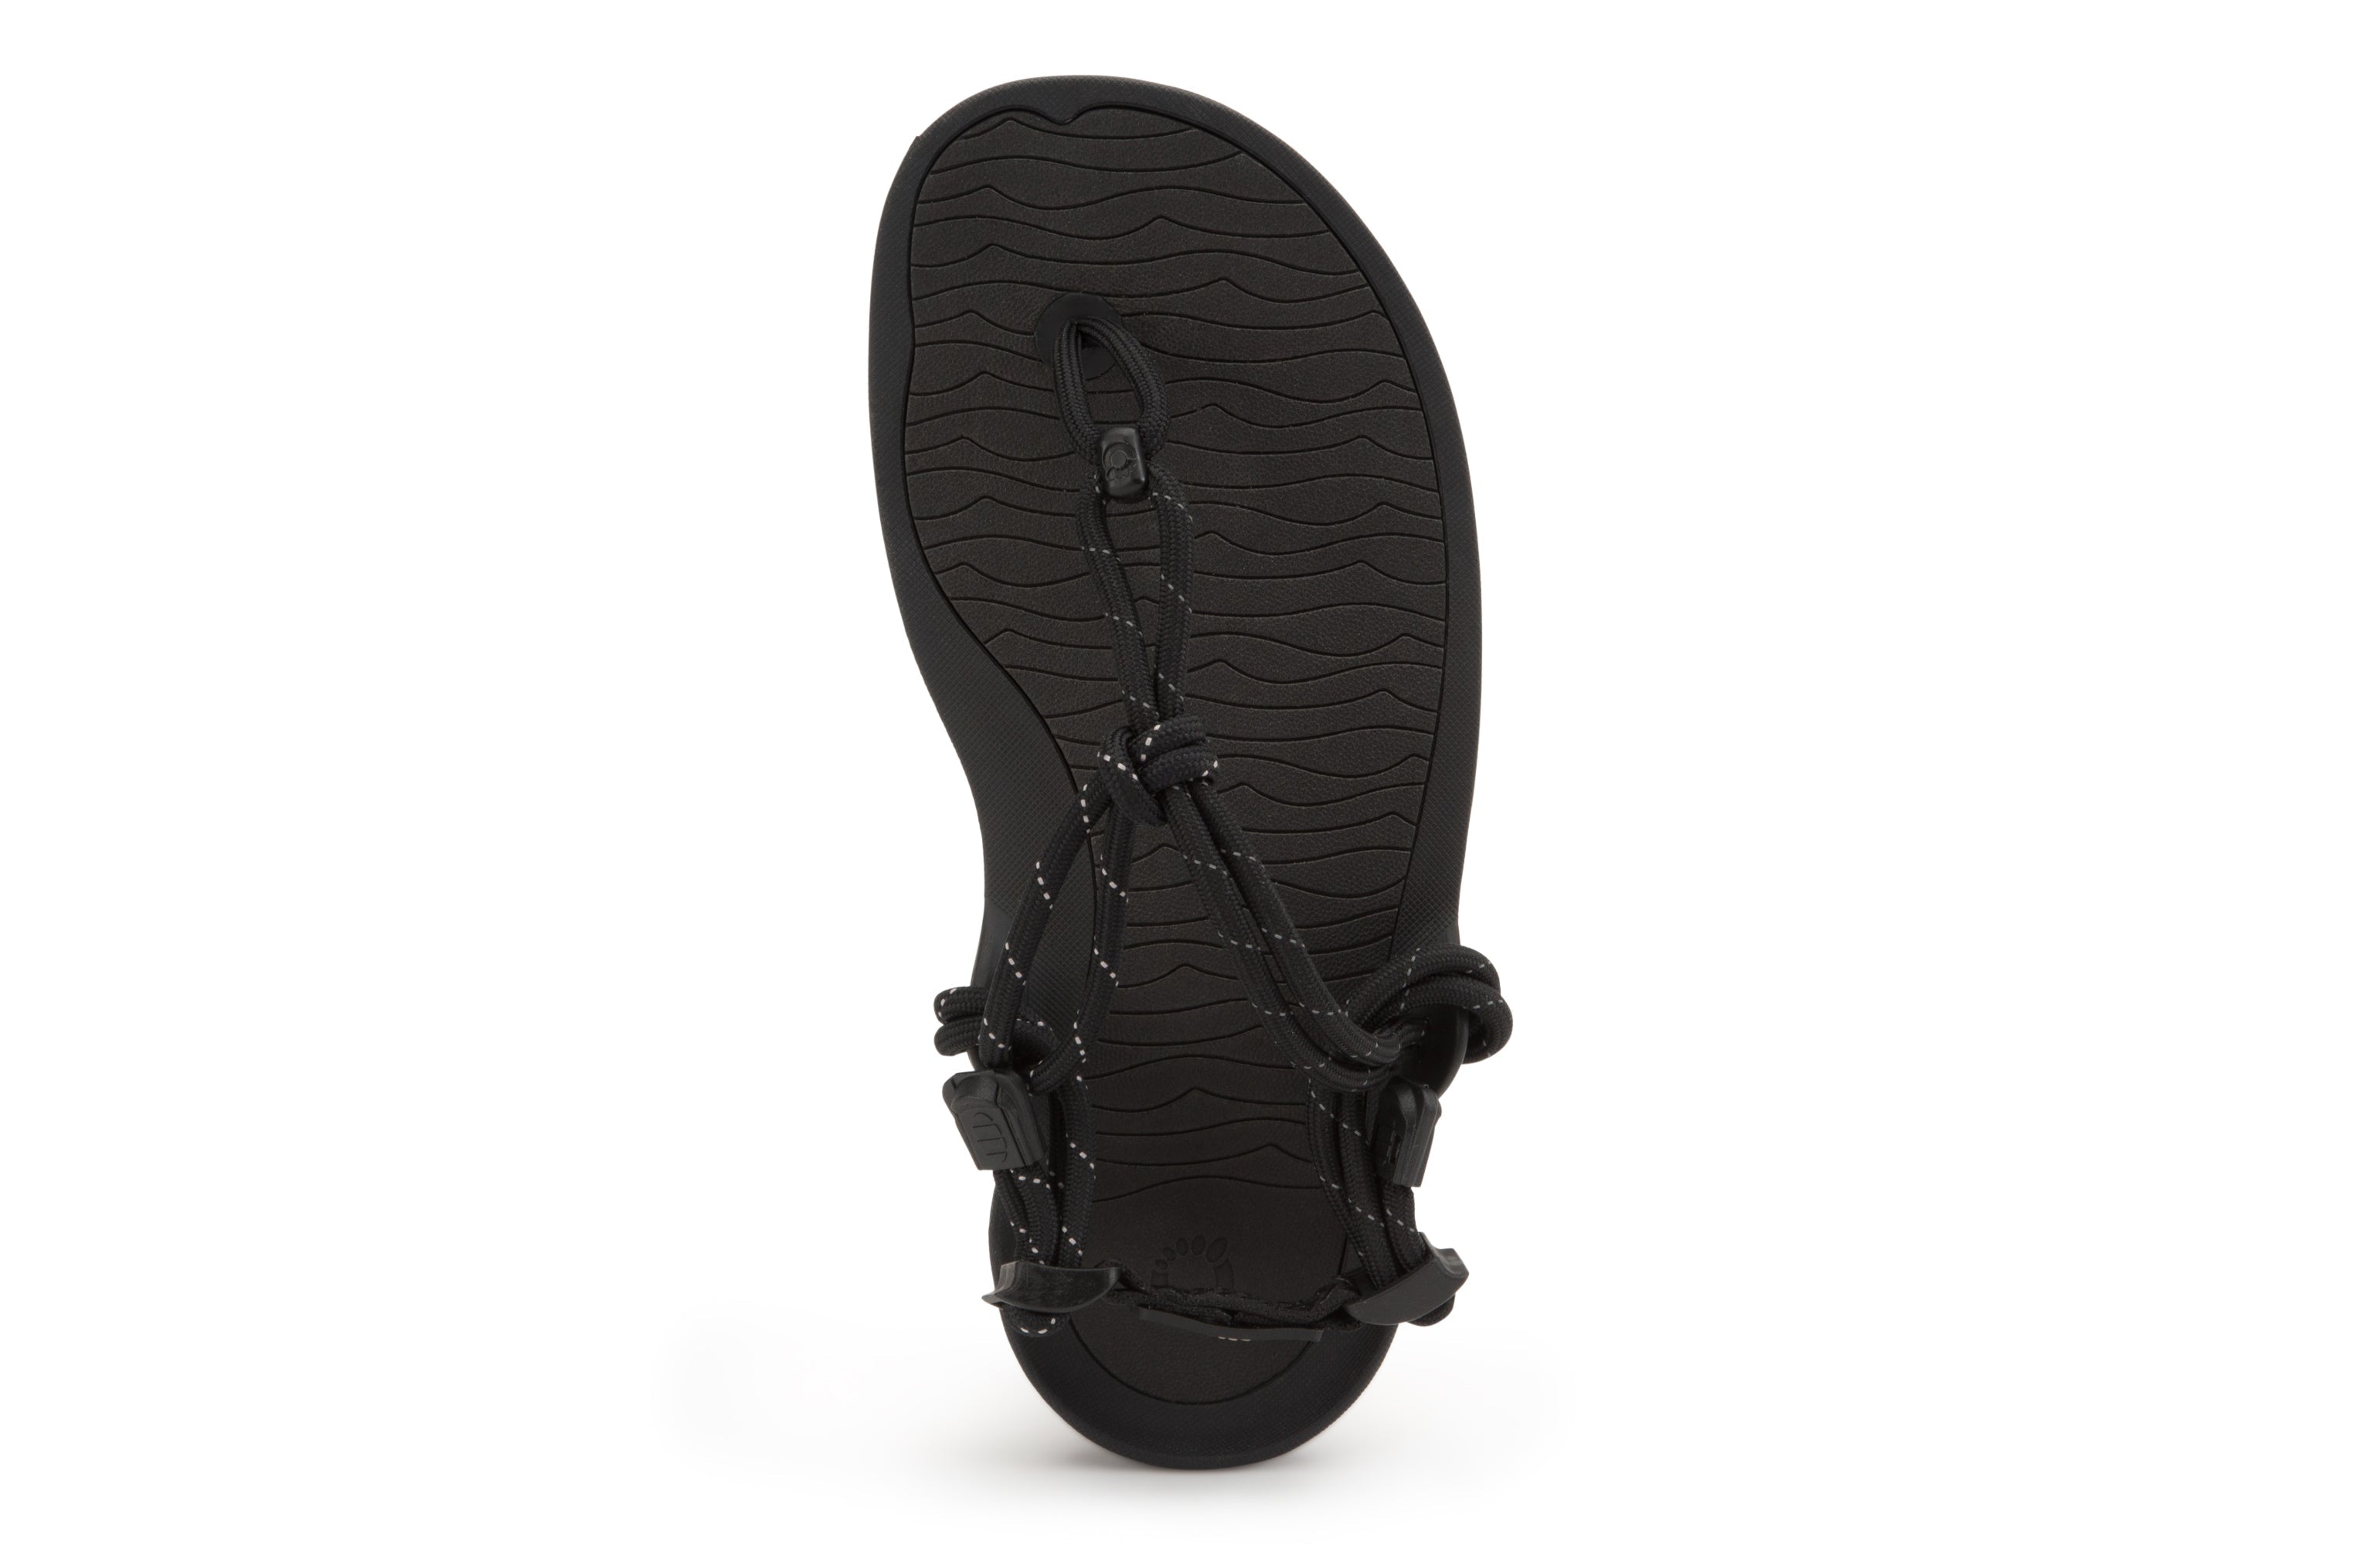 Xero Shoes Aqua Cloud Womens barfods minimalistiske sandaler til kvinder i farven black, top